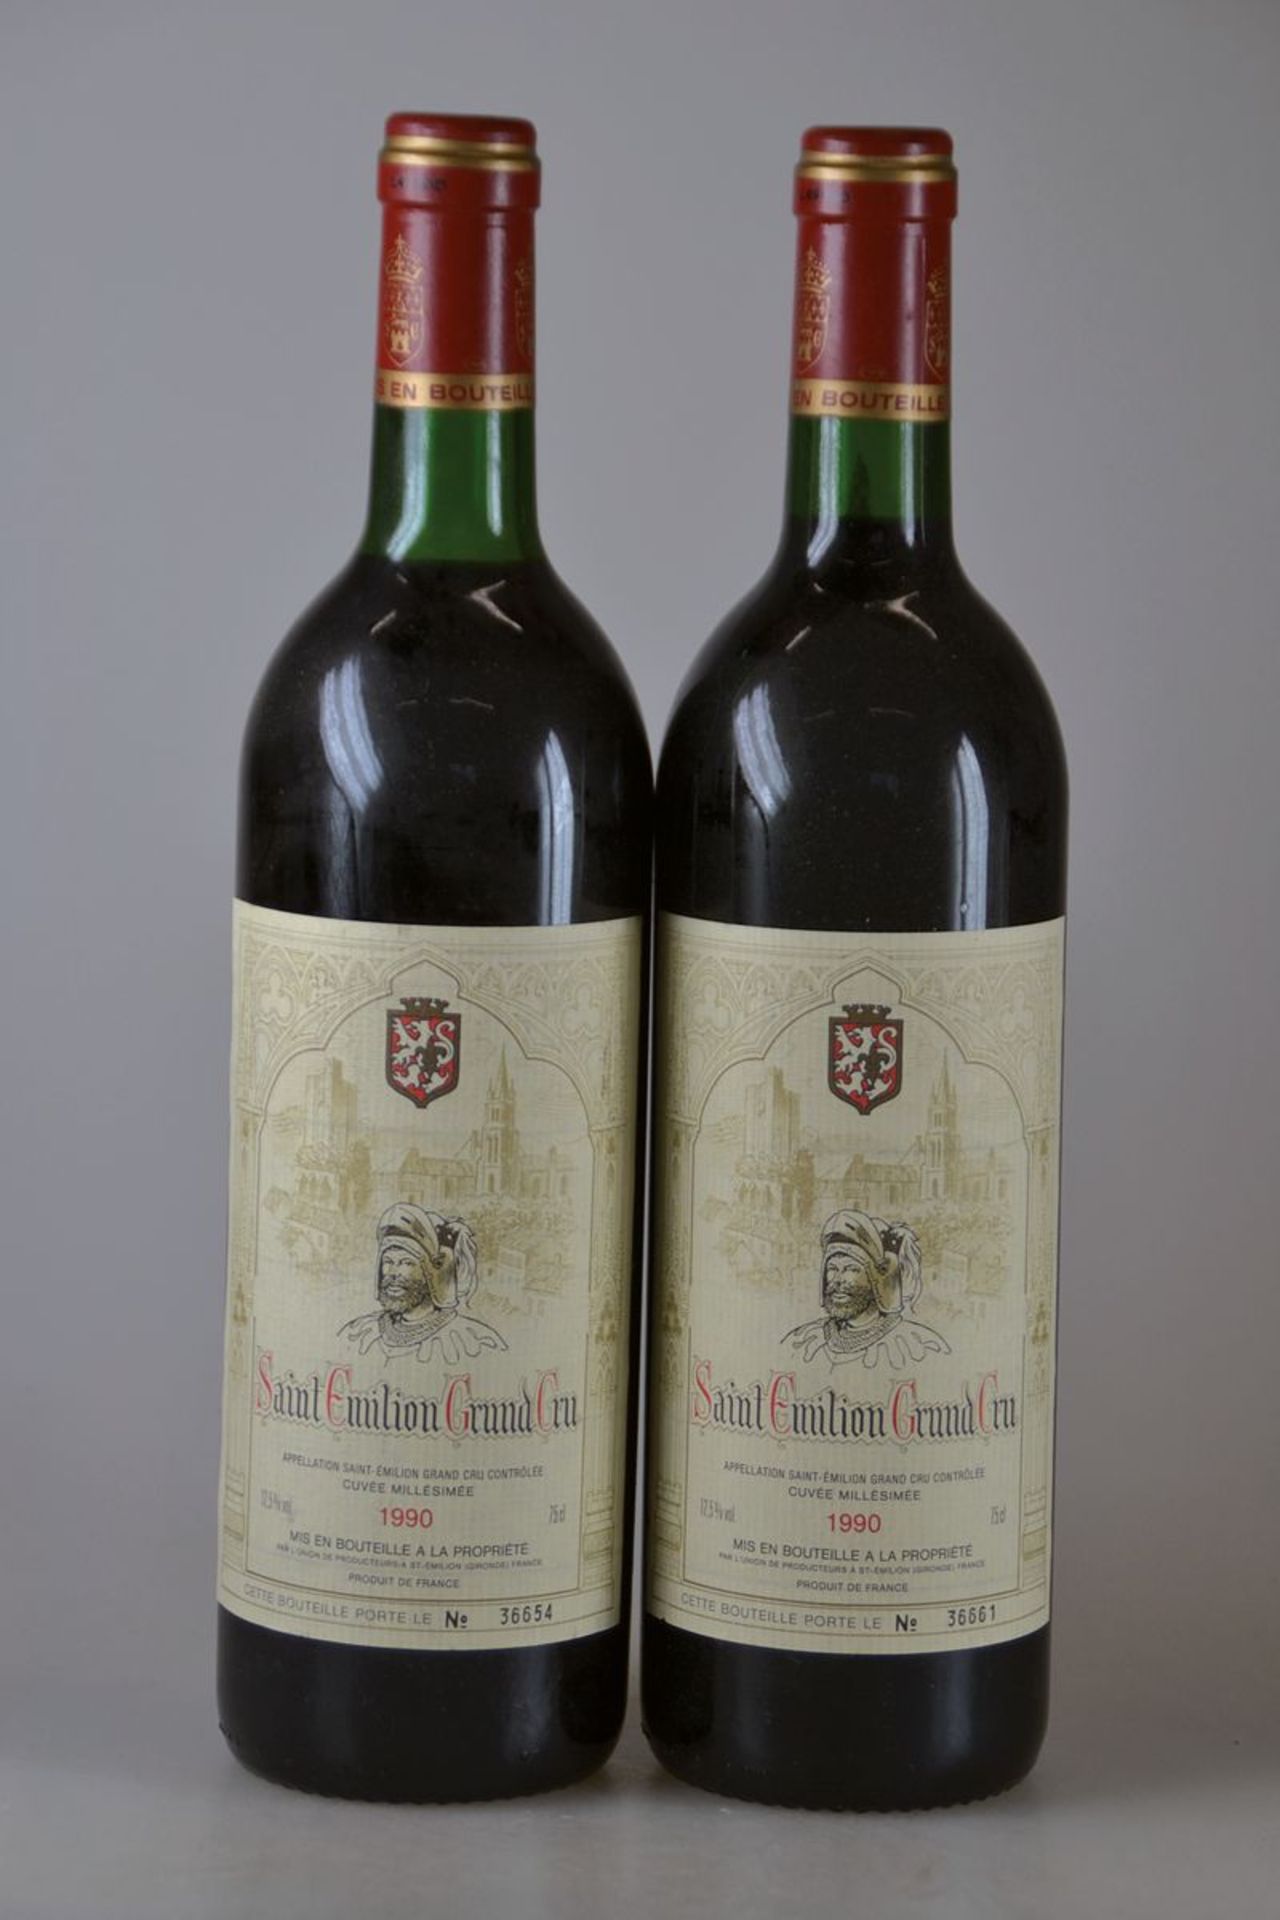 4 Flaschen 1990 Saint Emilion Grand Cru, CuveeMillisimee,